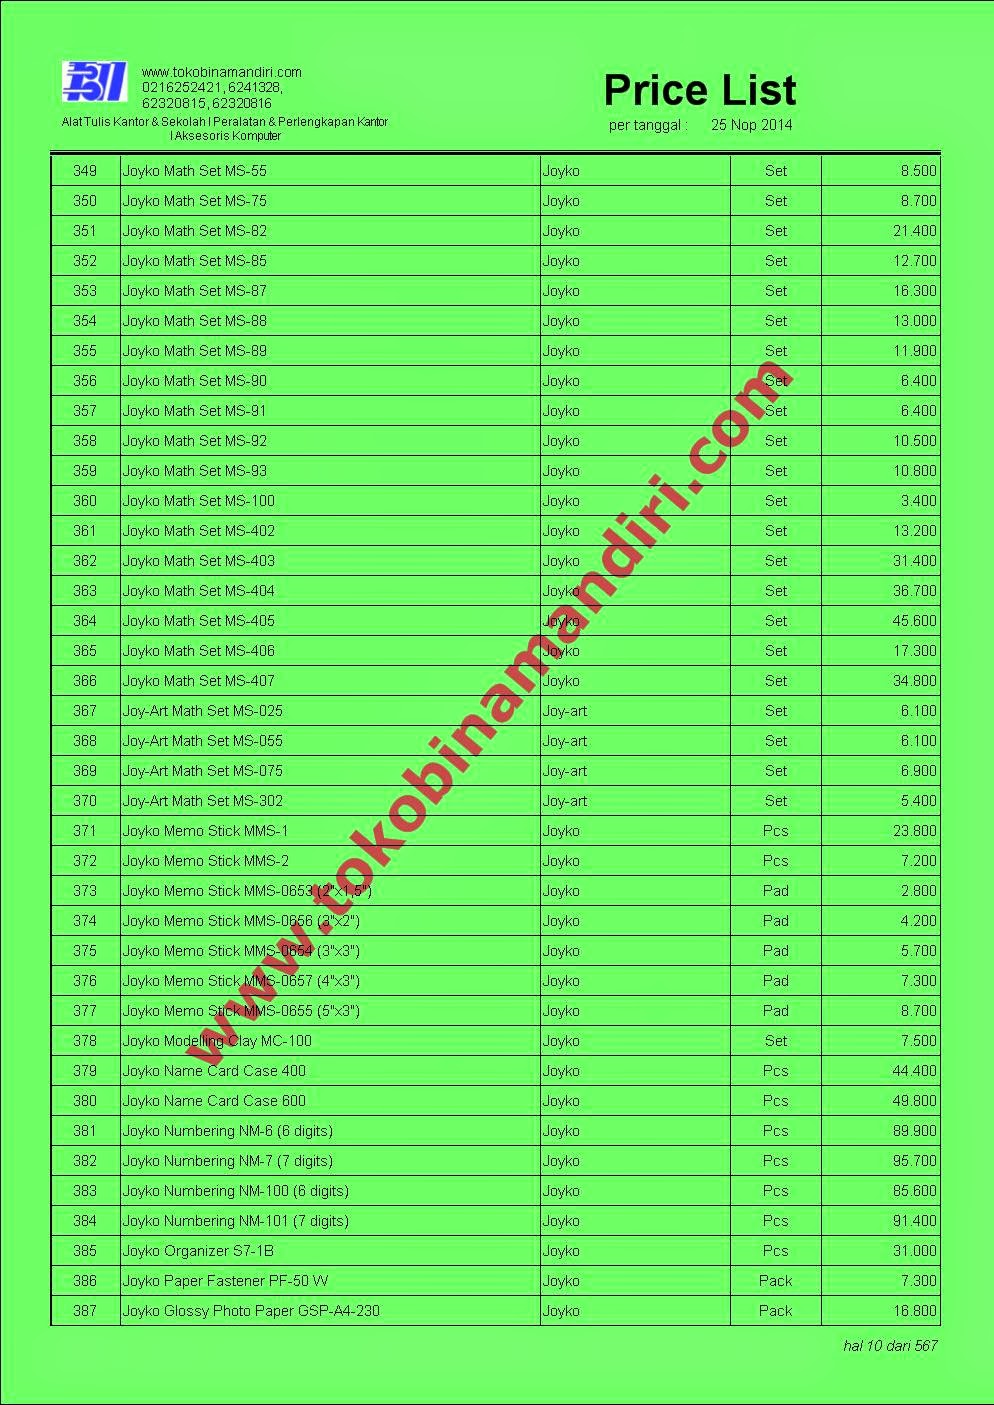 Daftar Harga Alat Tulis Kantor 2015 www.stationery.biz.id